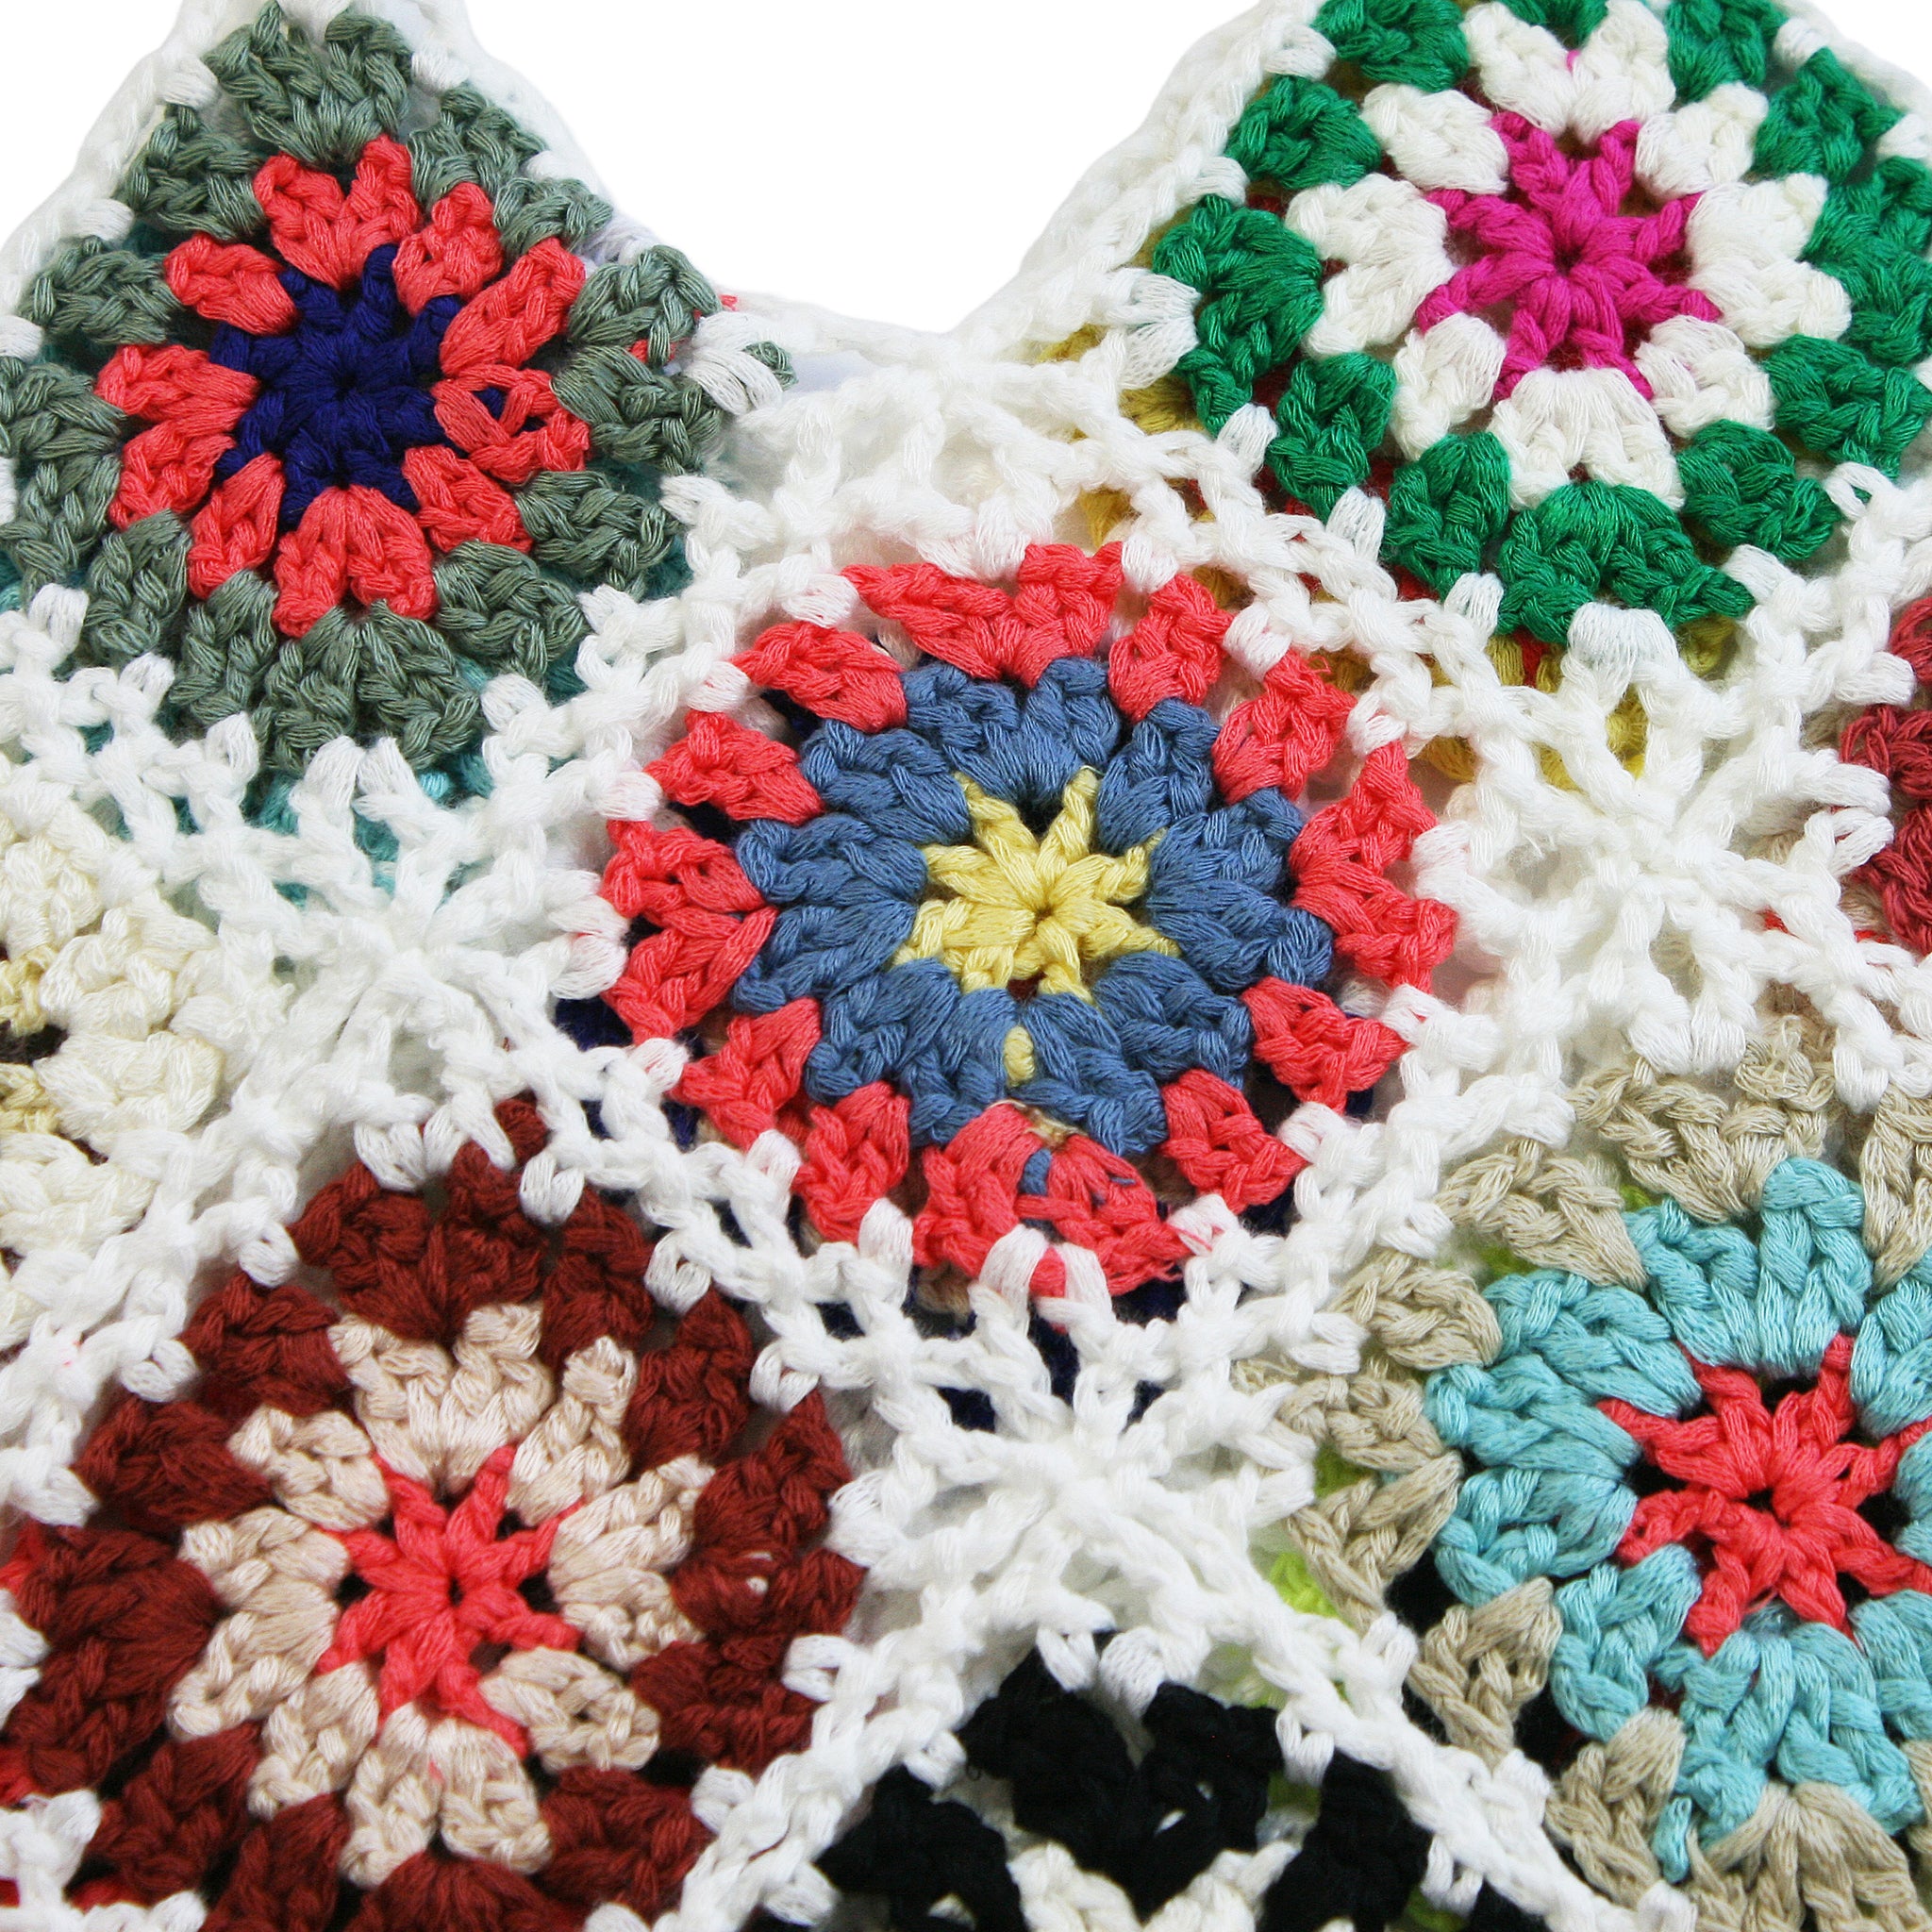 Patchwork Crochet Shoulder Bag in Multicolor and White